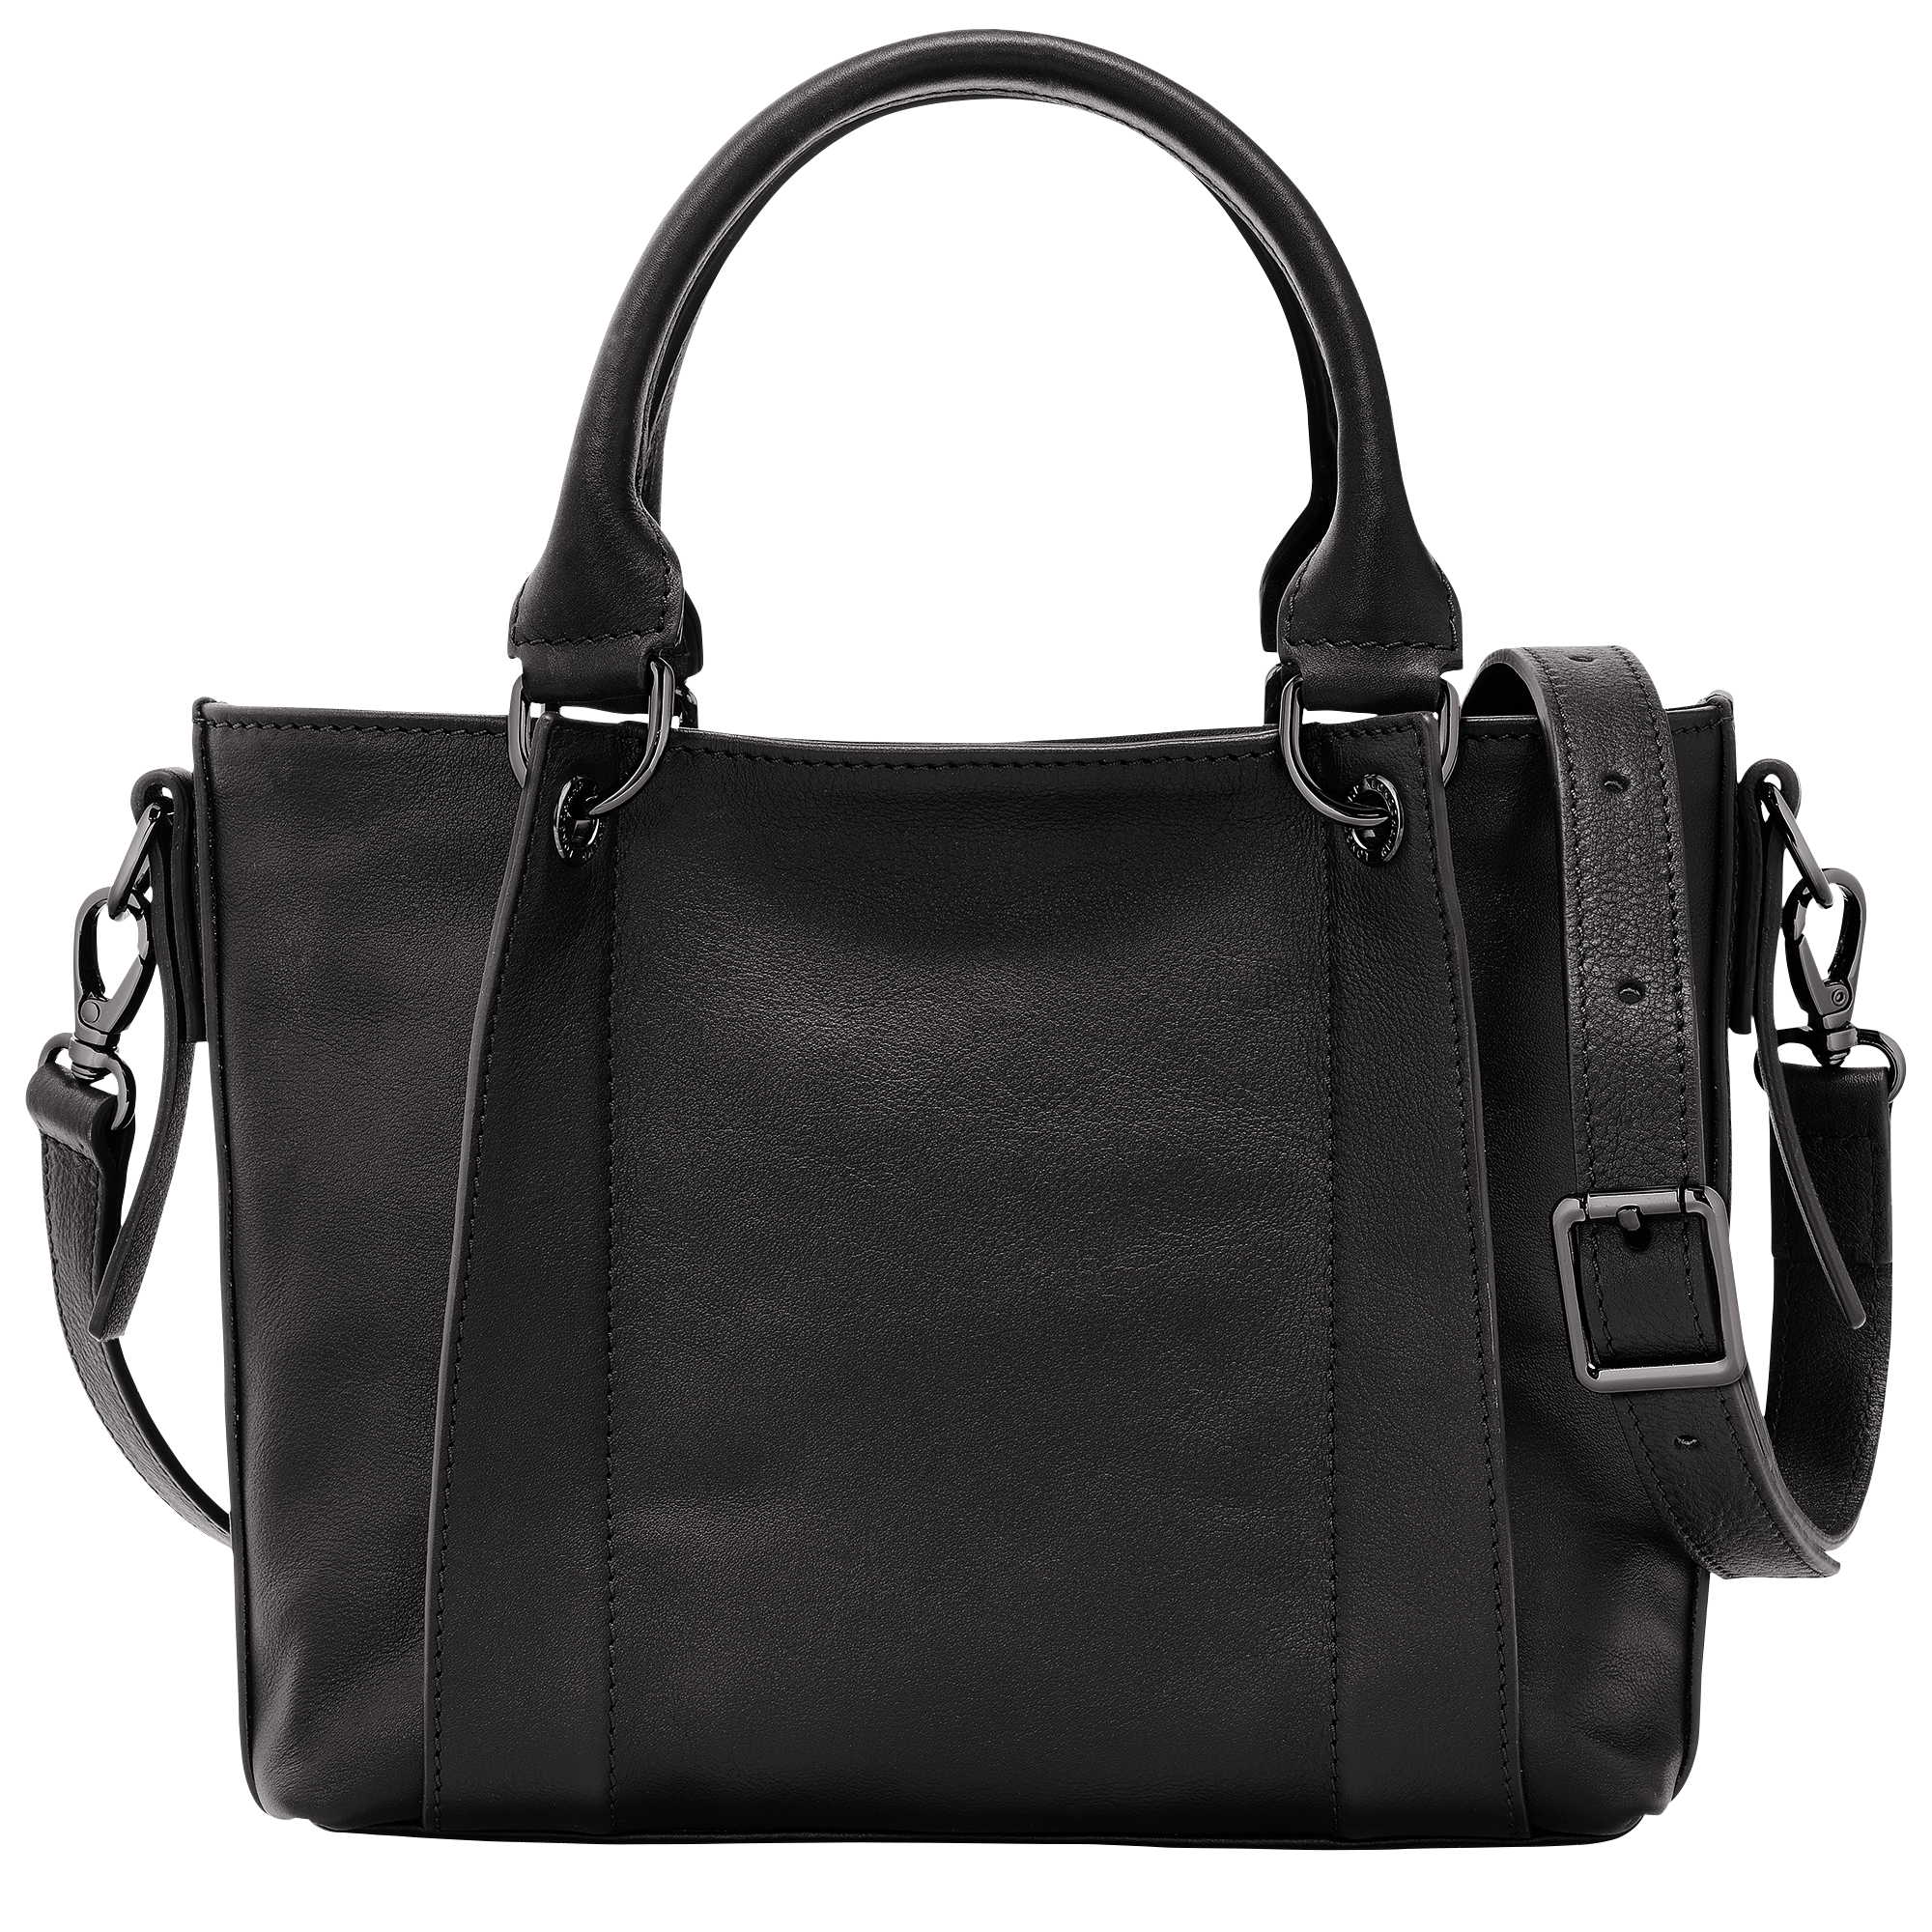 Longchamp 3D Handbag S, Black